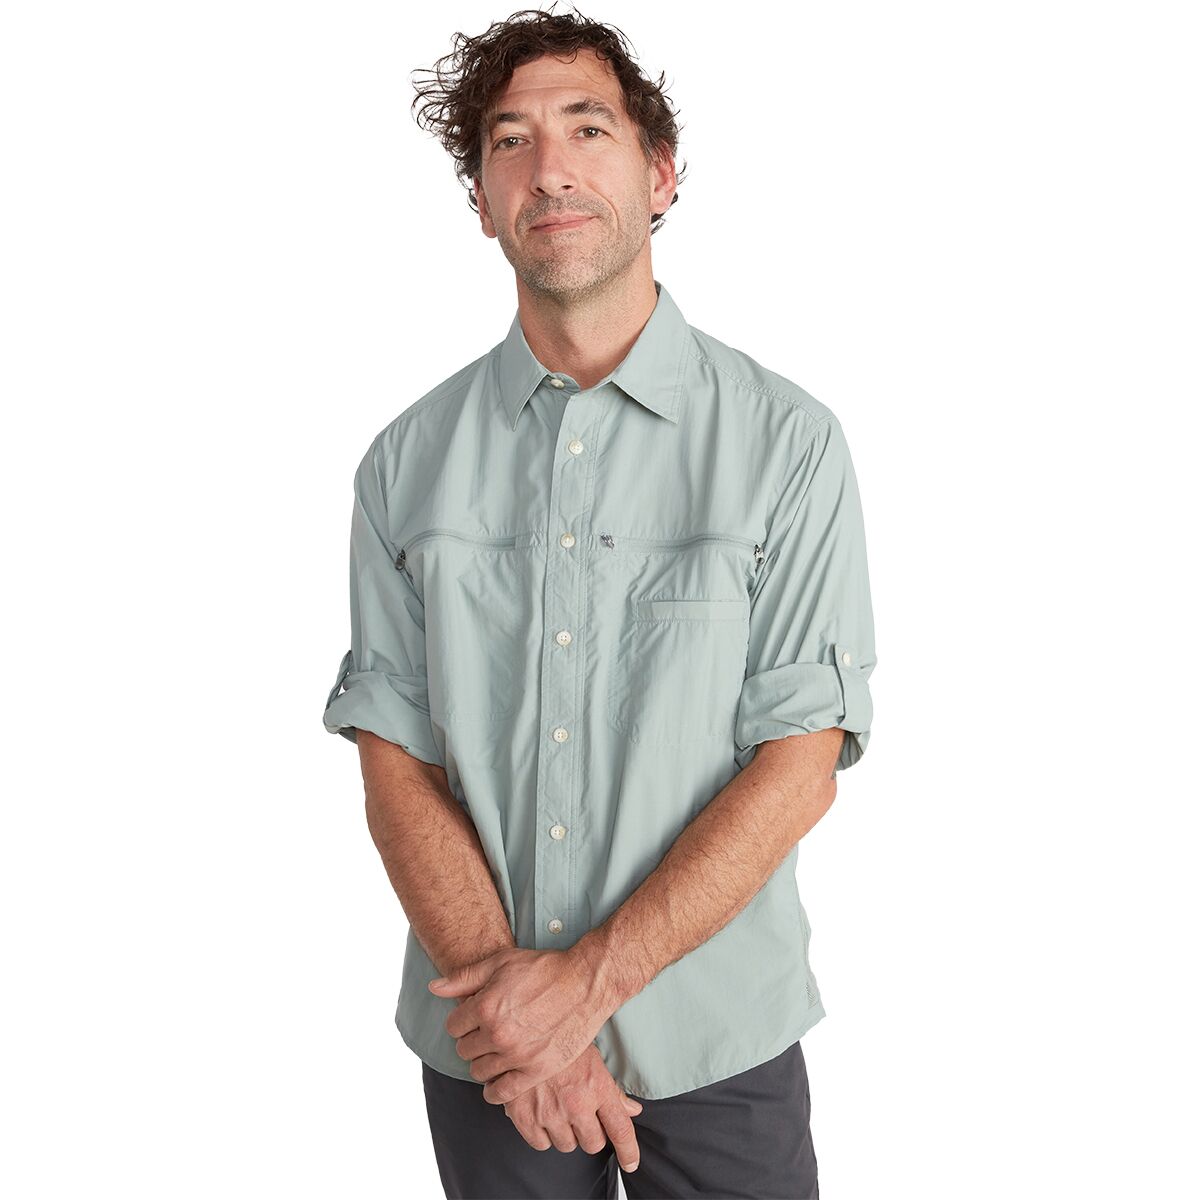 ExOfficio Reef Runner Long-Sleeve Shirt - Men's